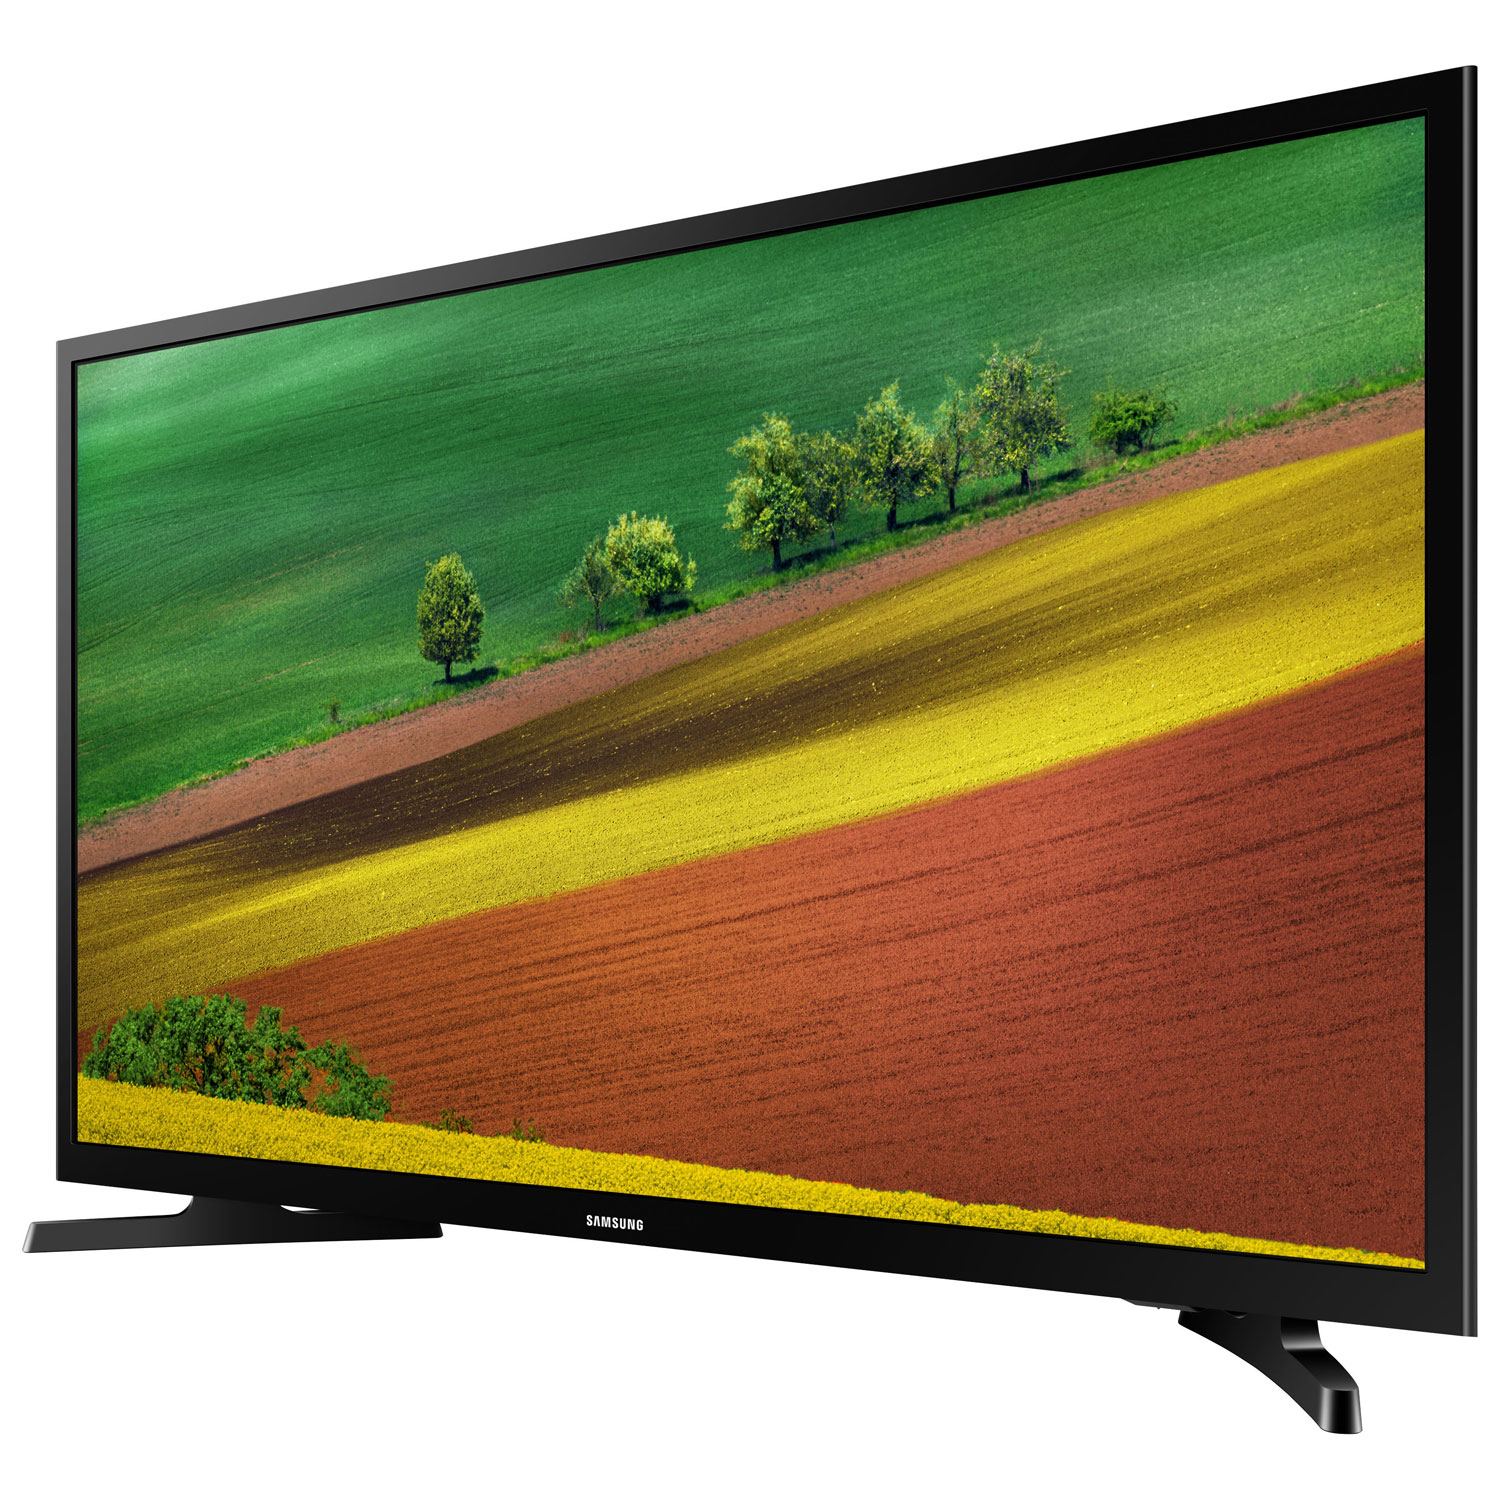 are samsung smart tvs 1080p or 720p